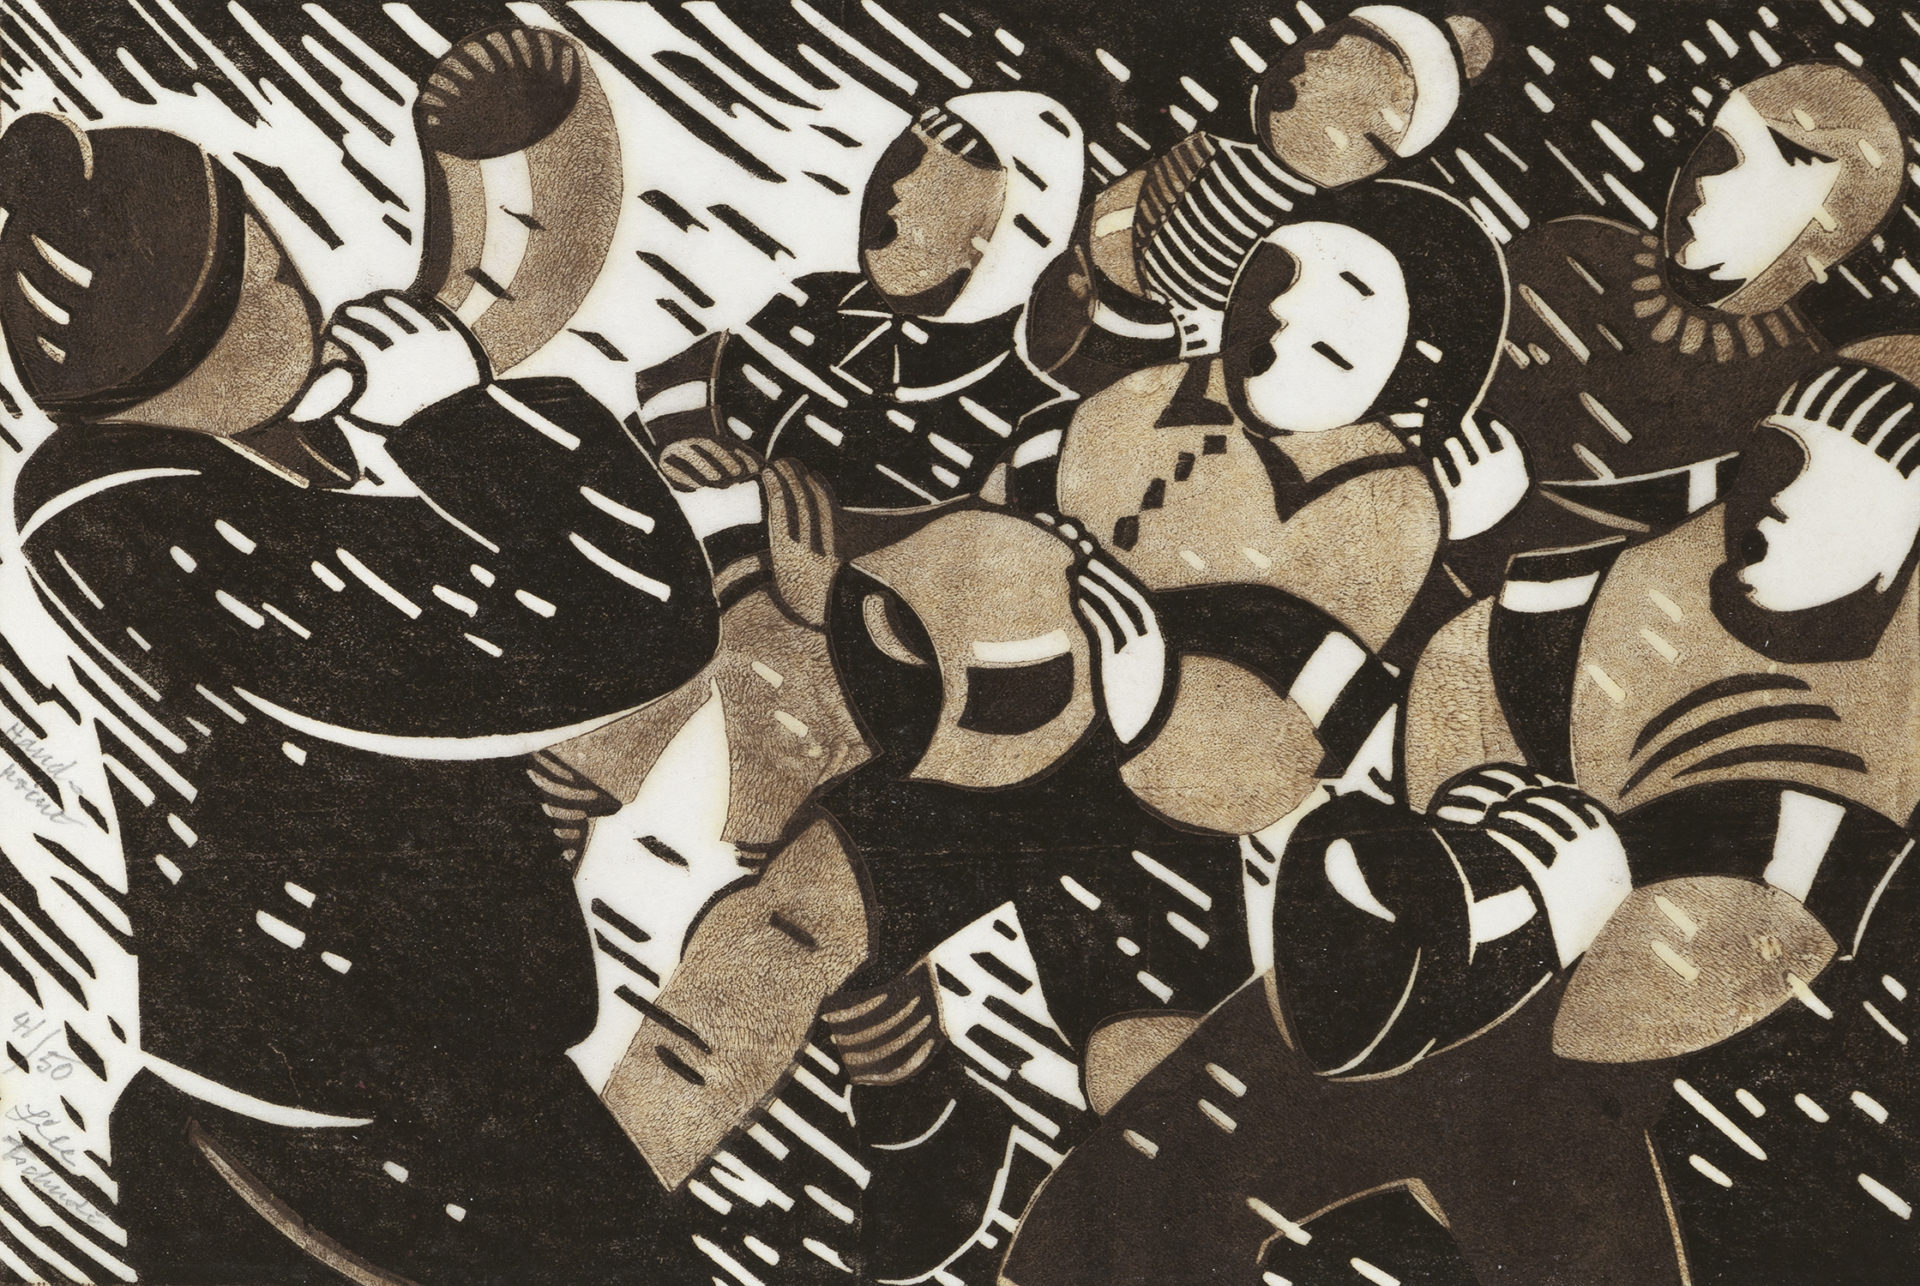 Klaus Buben, 1939, Linocut, 9 3/4 x 13 3/4 inches (24.8 x 34.9 cm), Edition of 50